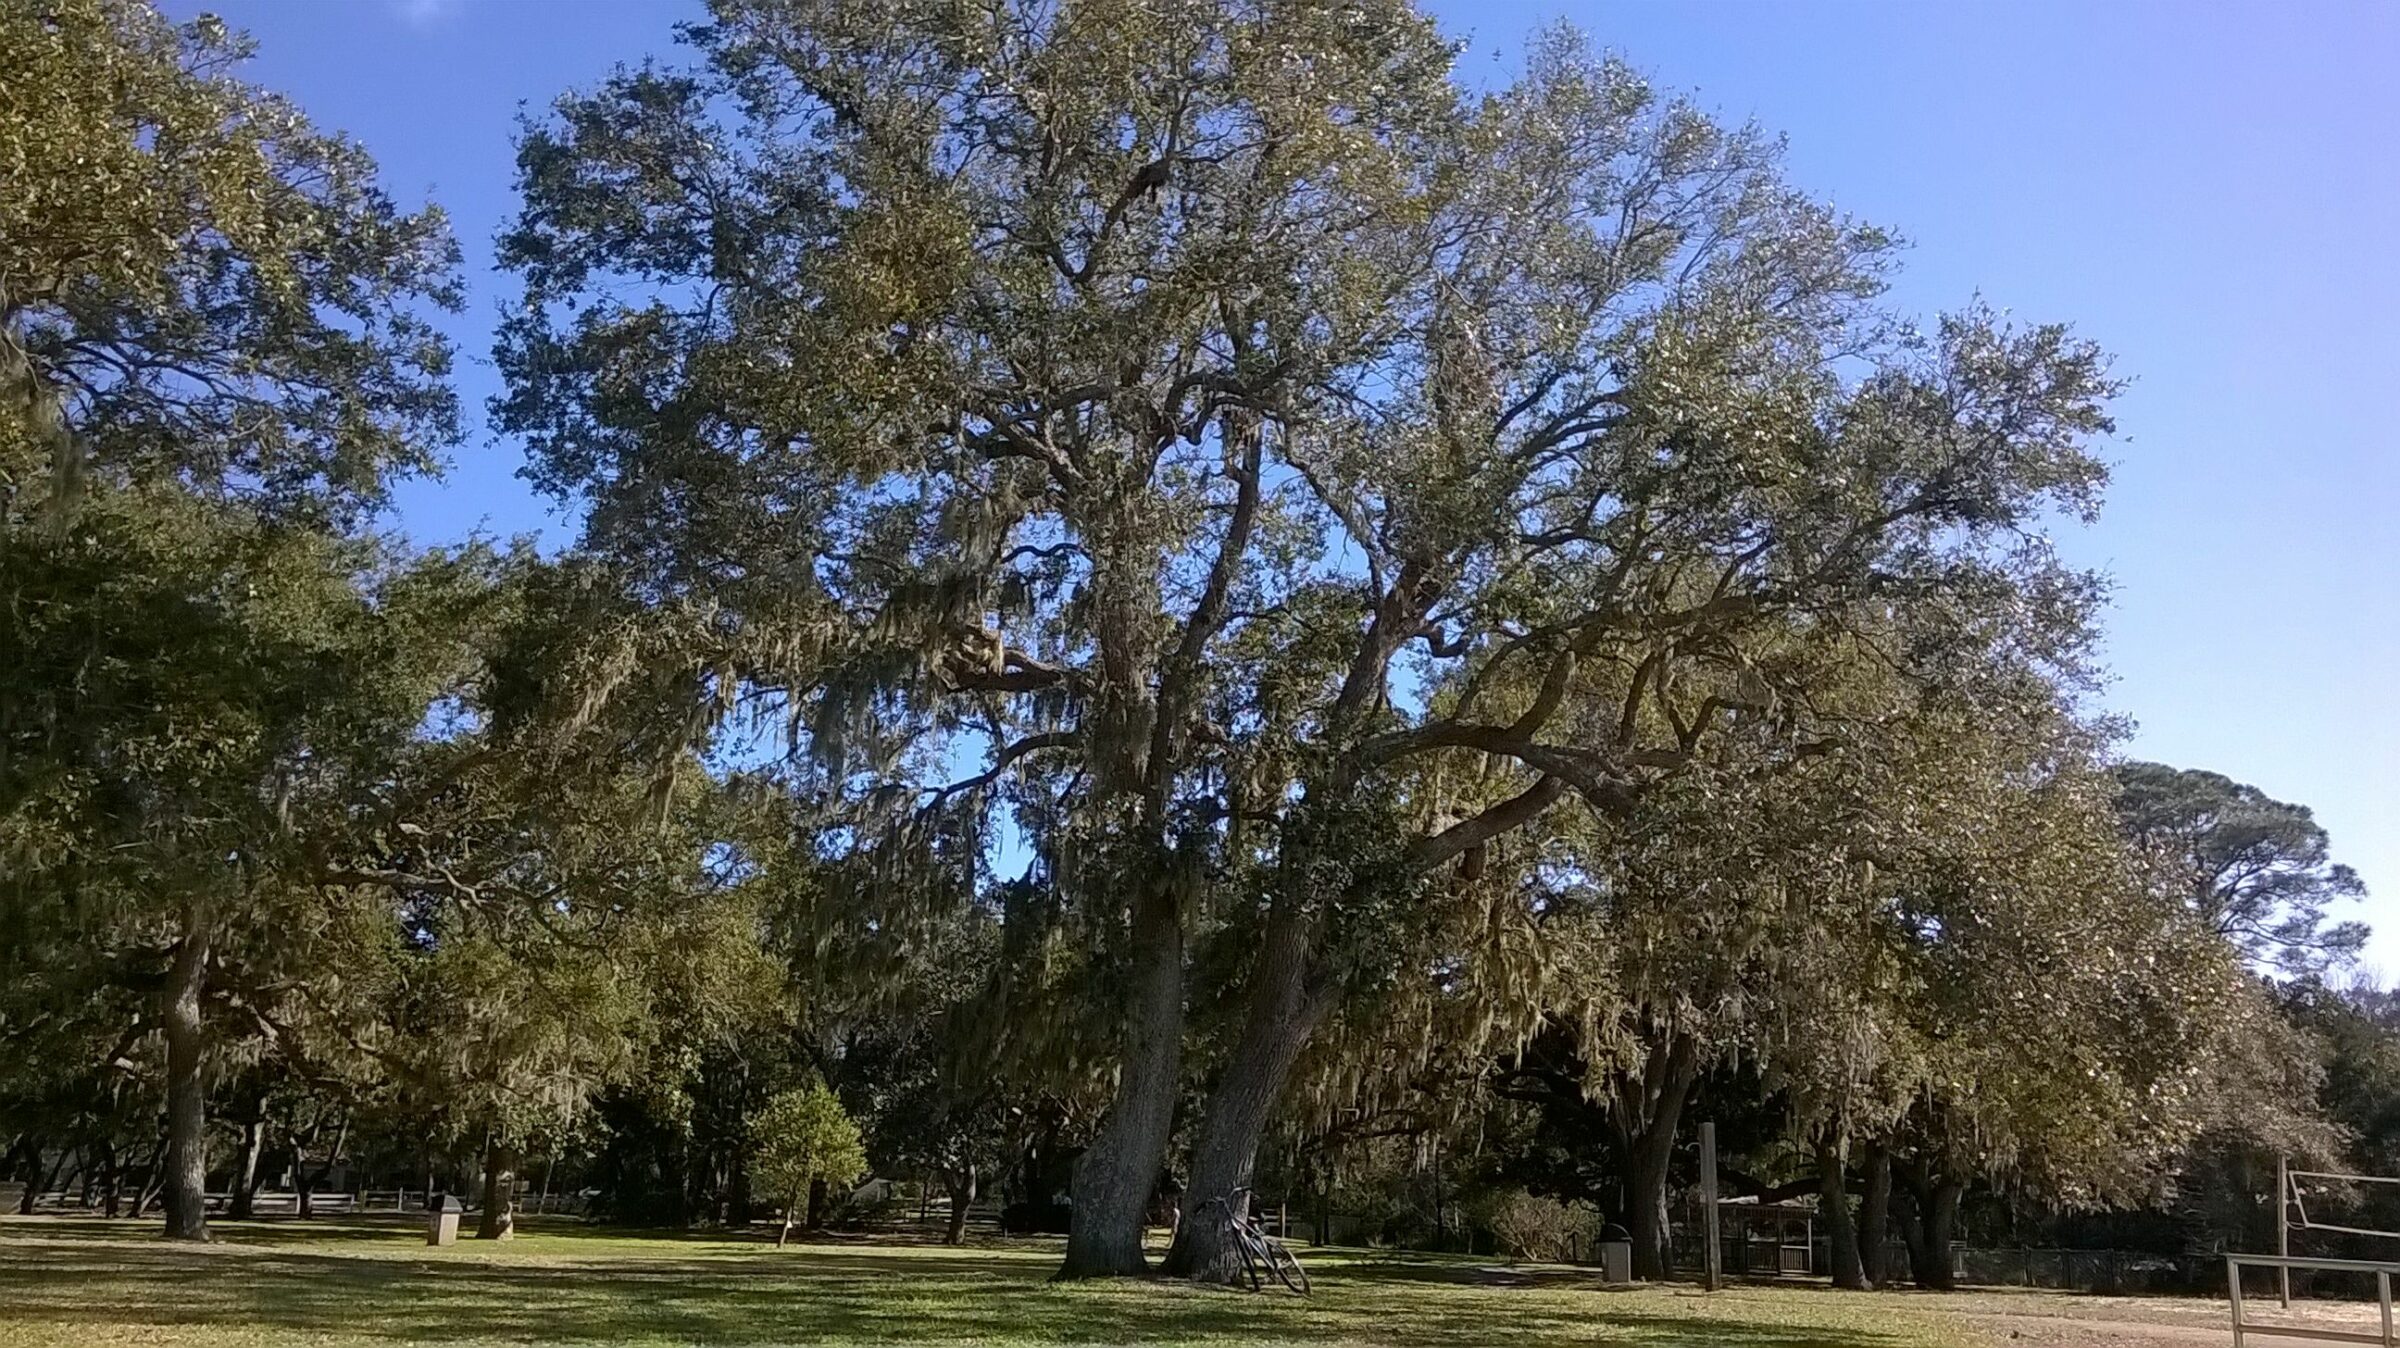 Southern Live Oak Tree-Fort Walton Beach Florida-06